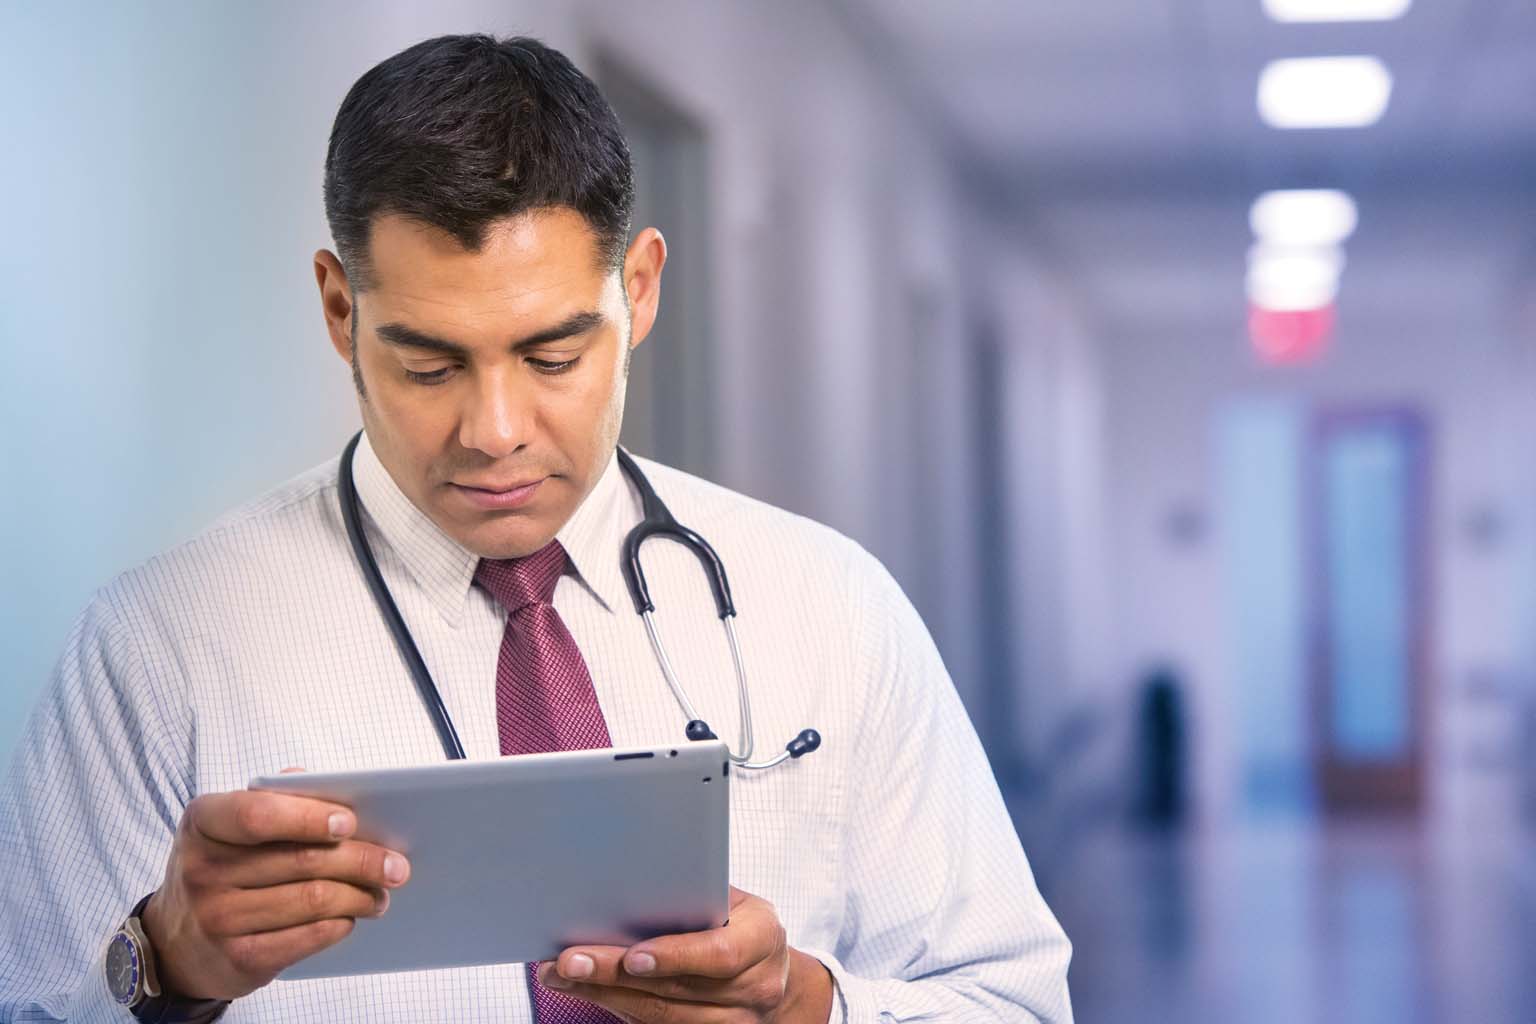 doctor paused in hallway looking at tablet